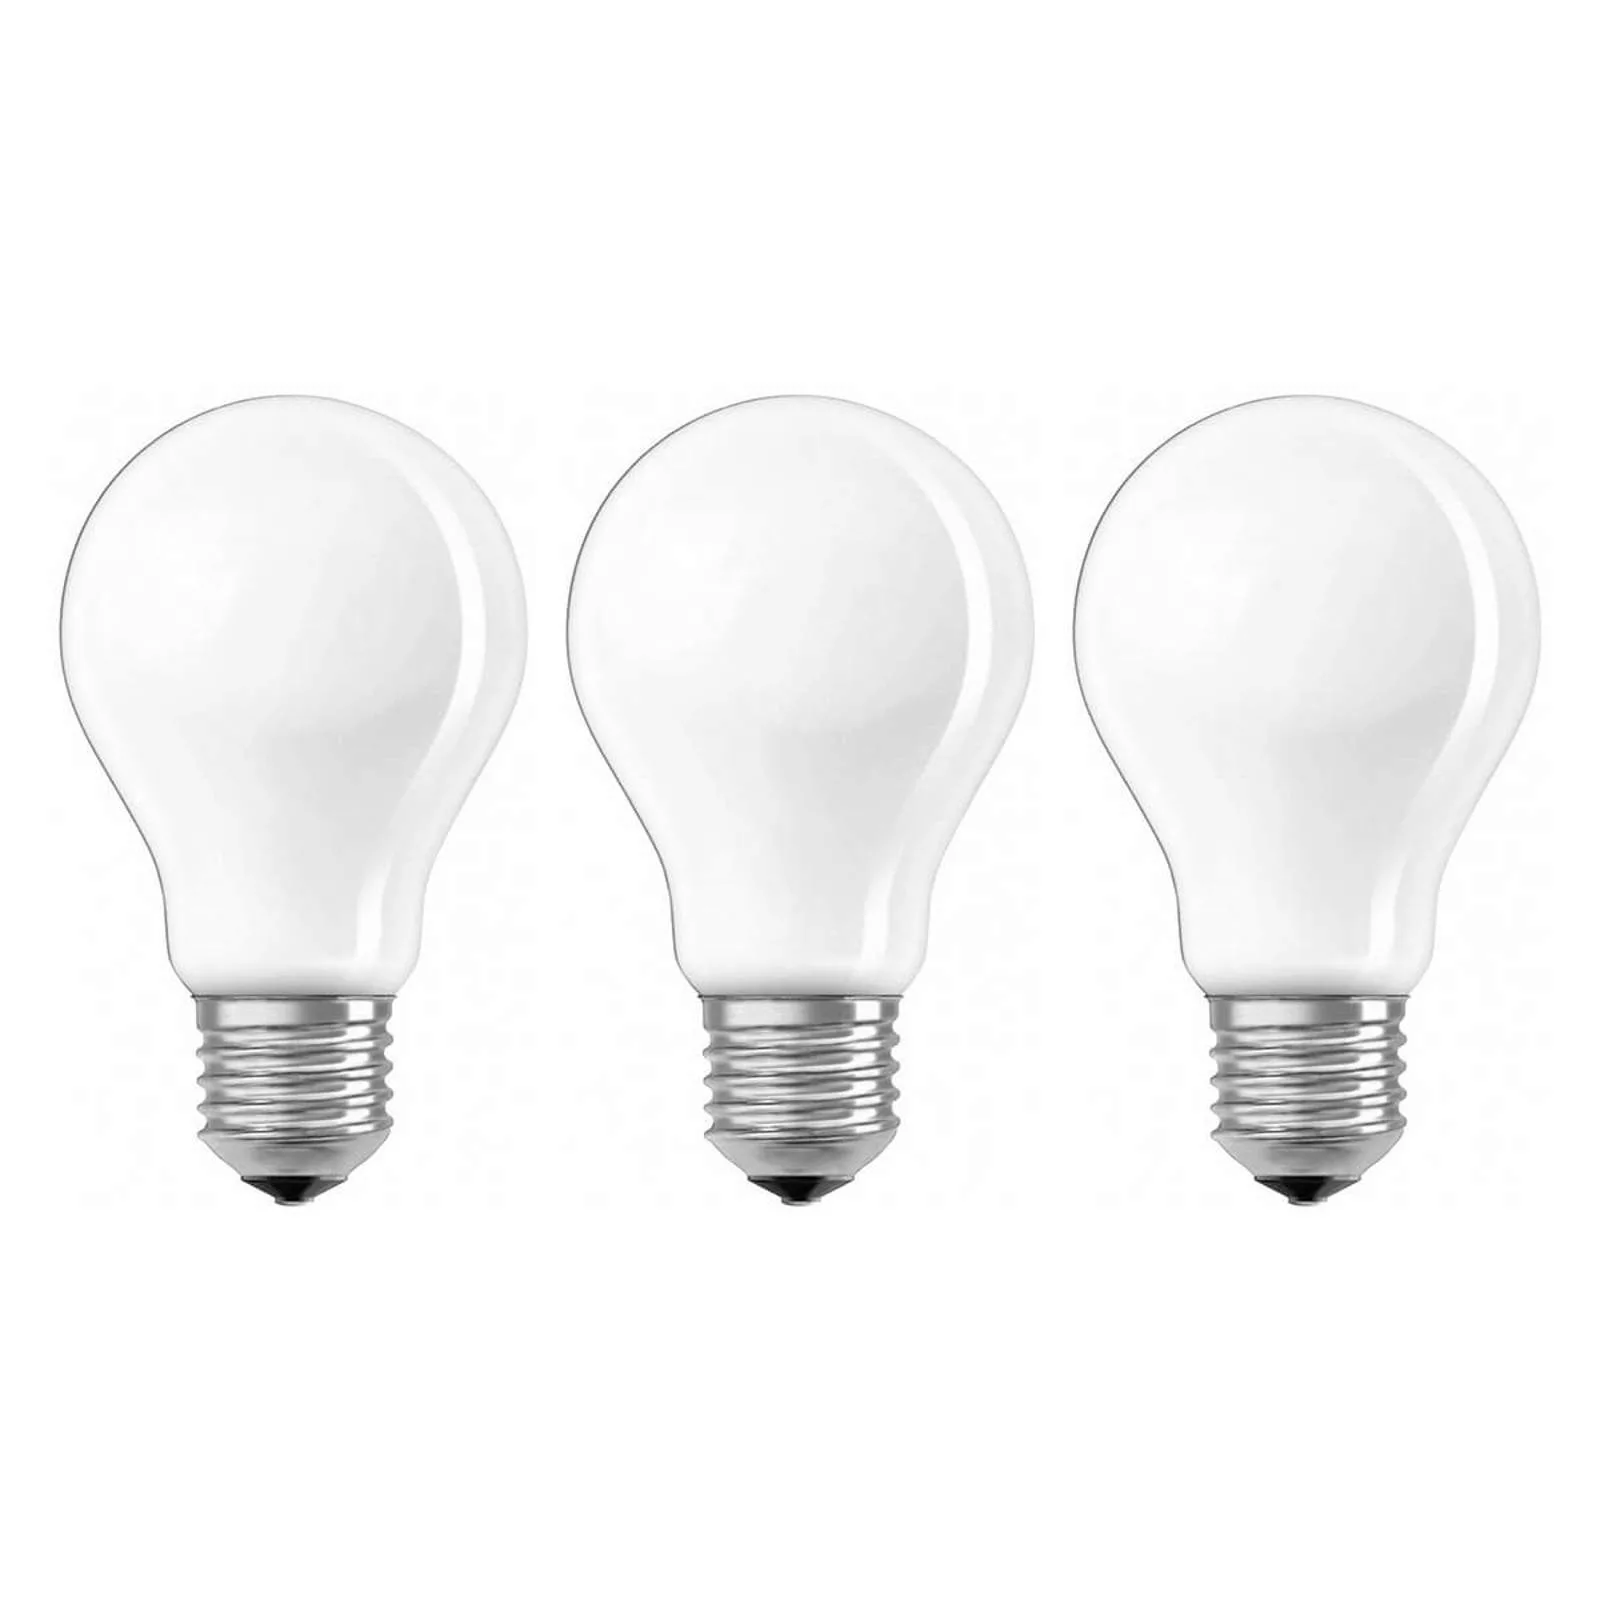 LED-Lampe E27 7W, 806 Lumen, 3er-Set günstig online kaufen